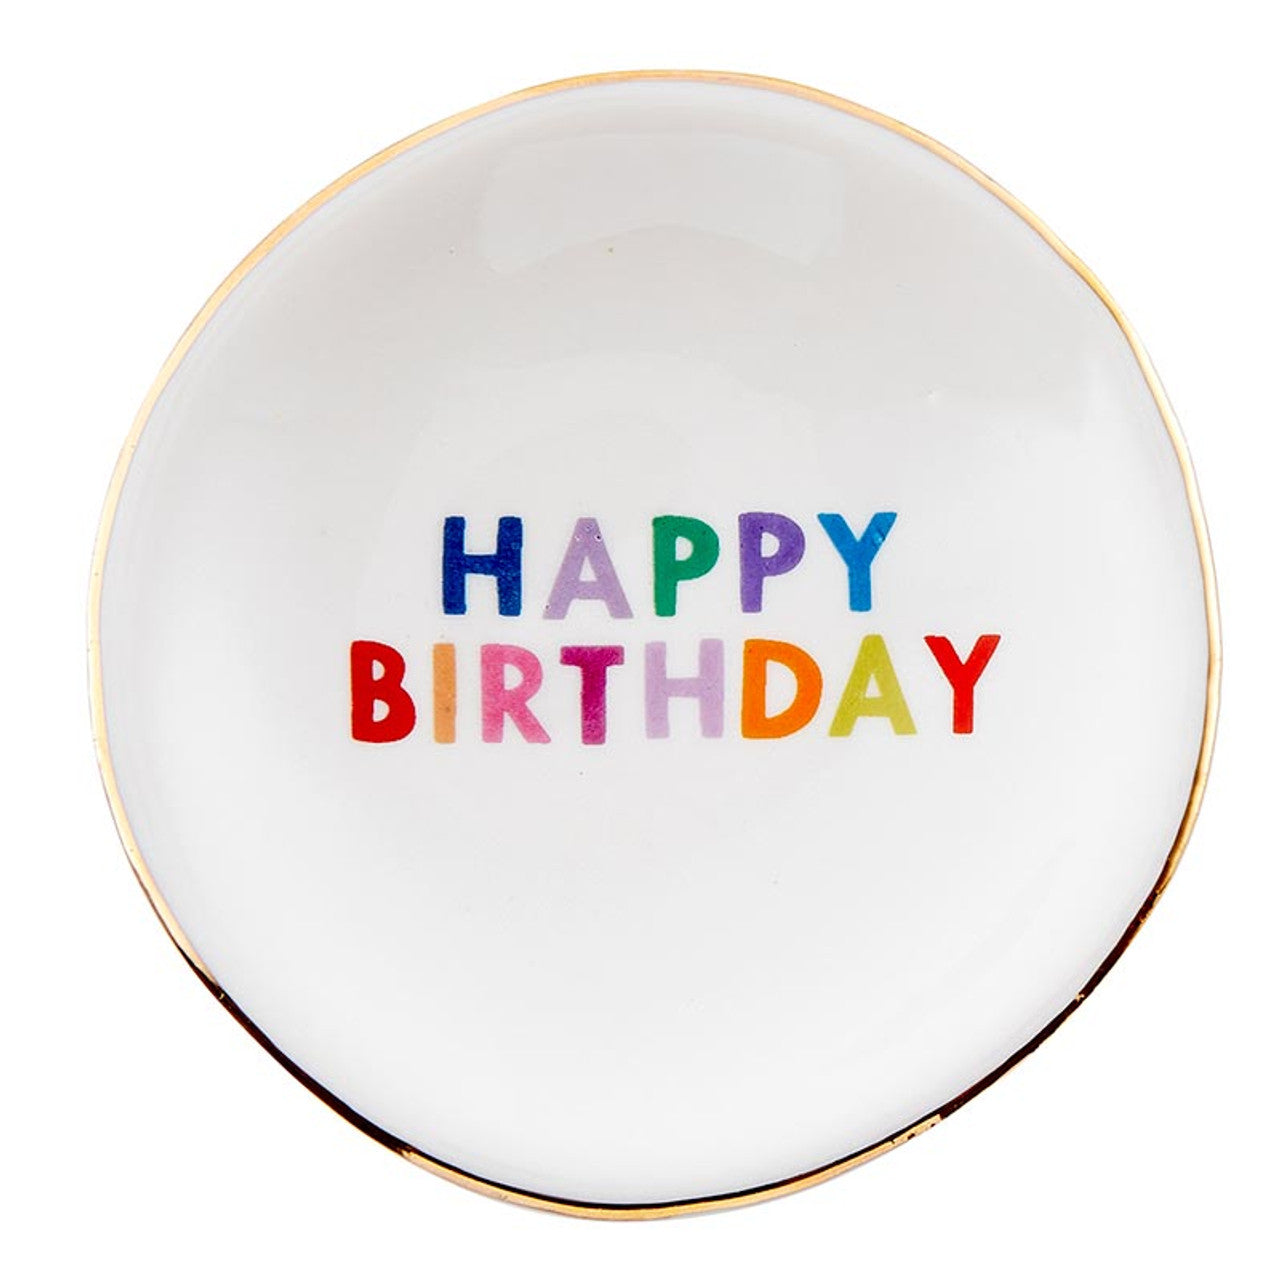 Happy Birthday Trinket Tray & Earring Set | Ceramic Dish Tray and Jewelry Gem Stones Earring Gift Set